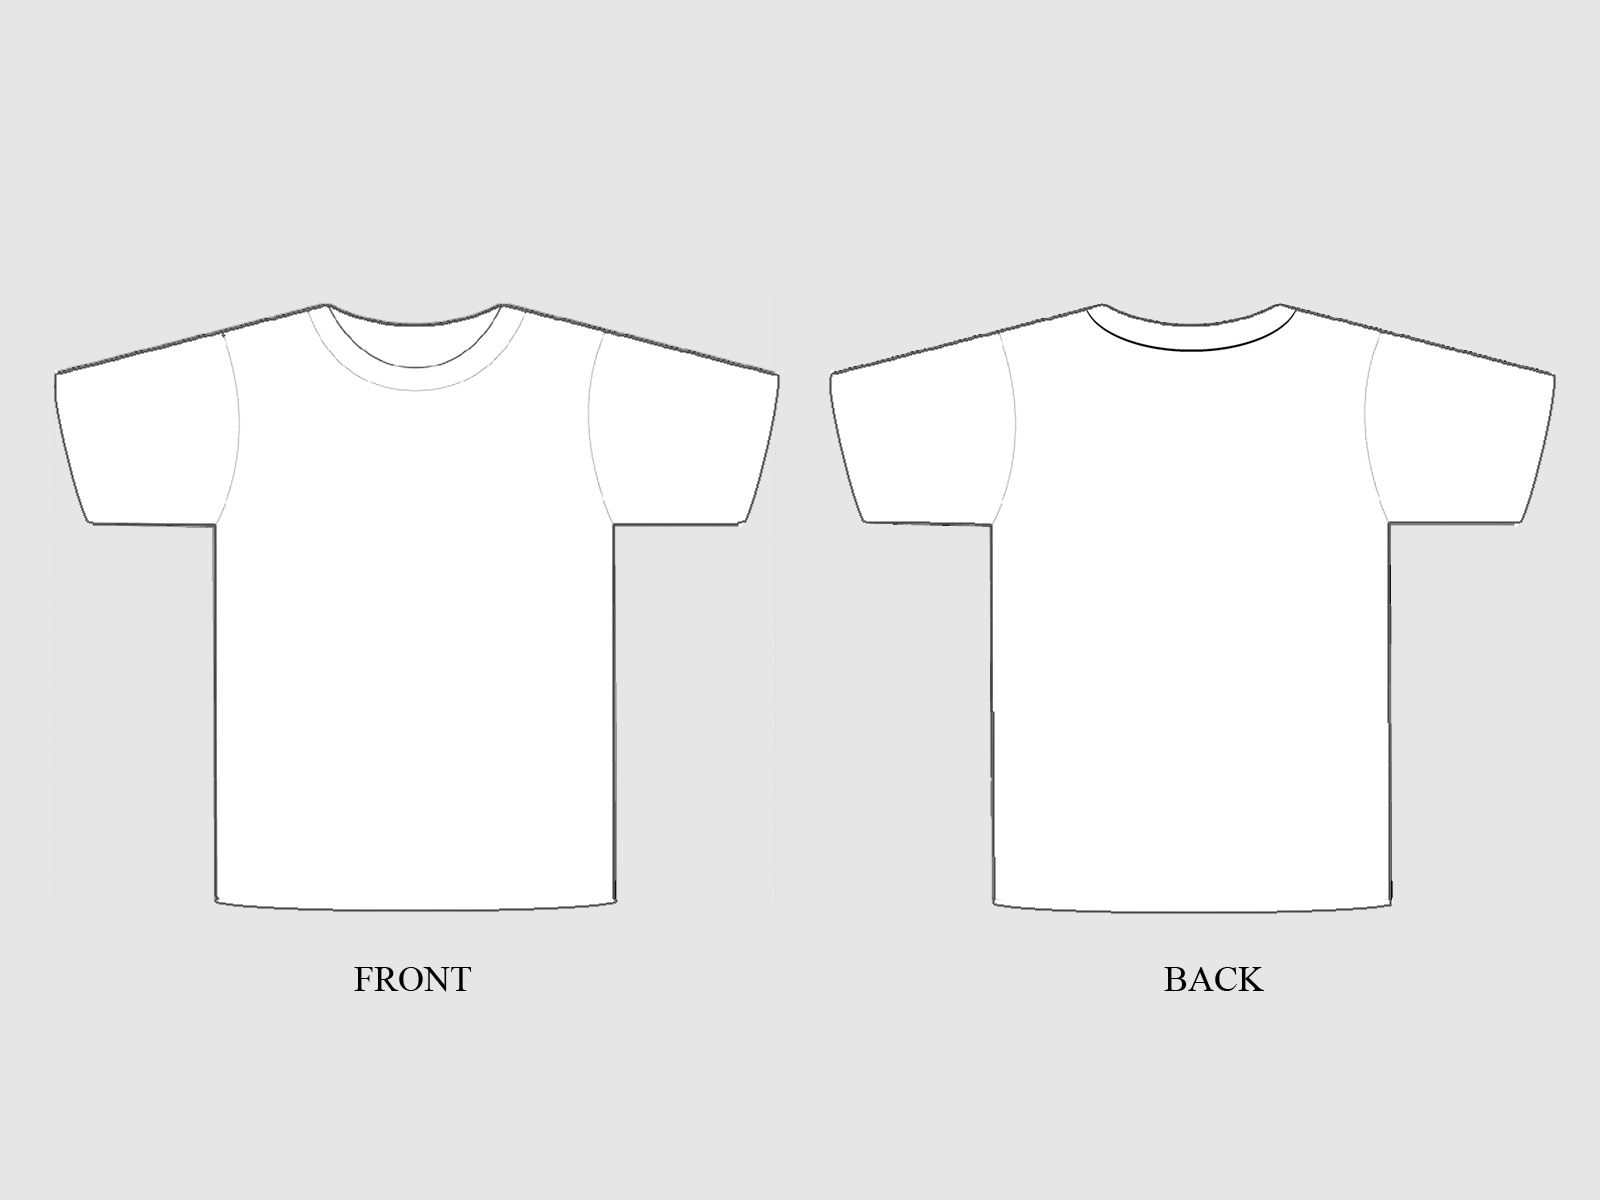 Help design the next batch of Org fan shirts